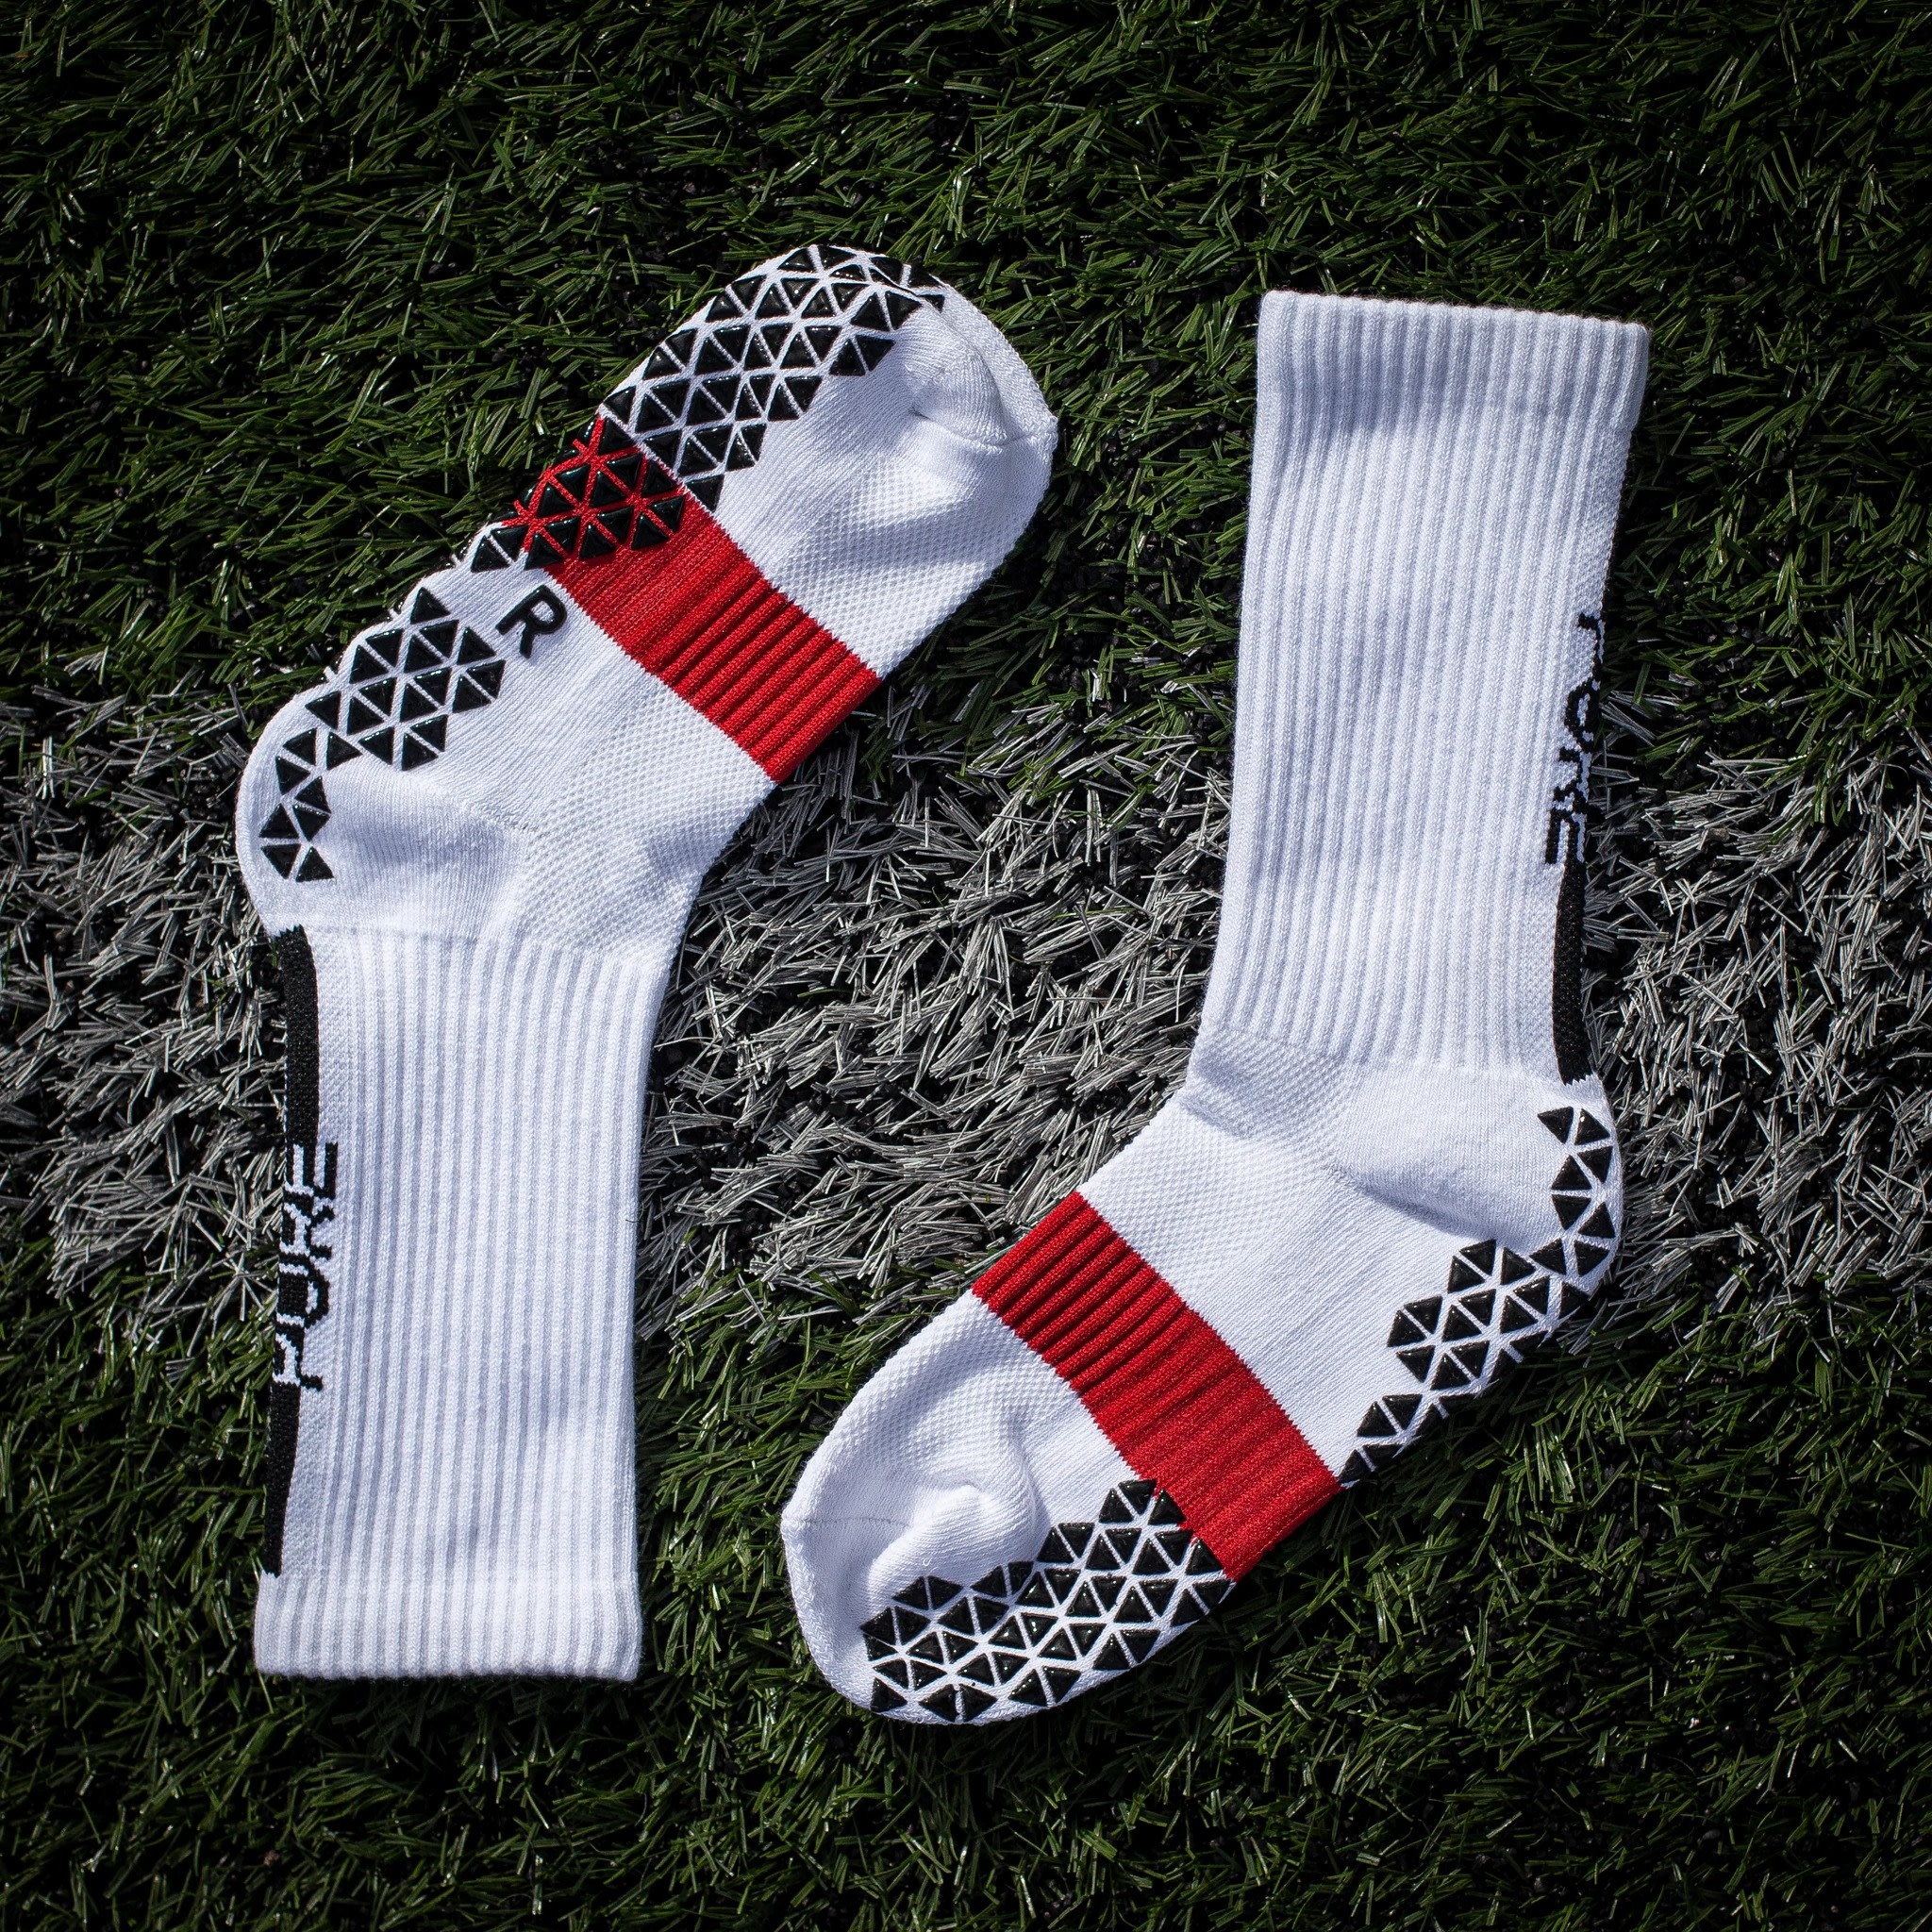 Pure Grip Socks - Red & White | Evangelista Sports